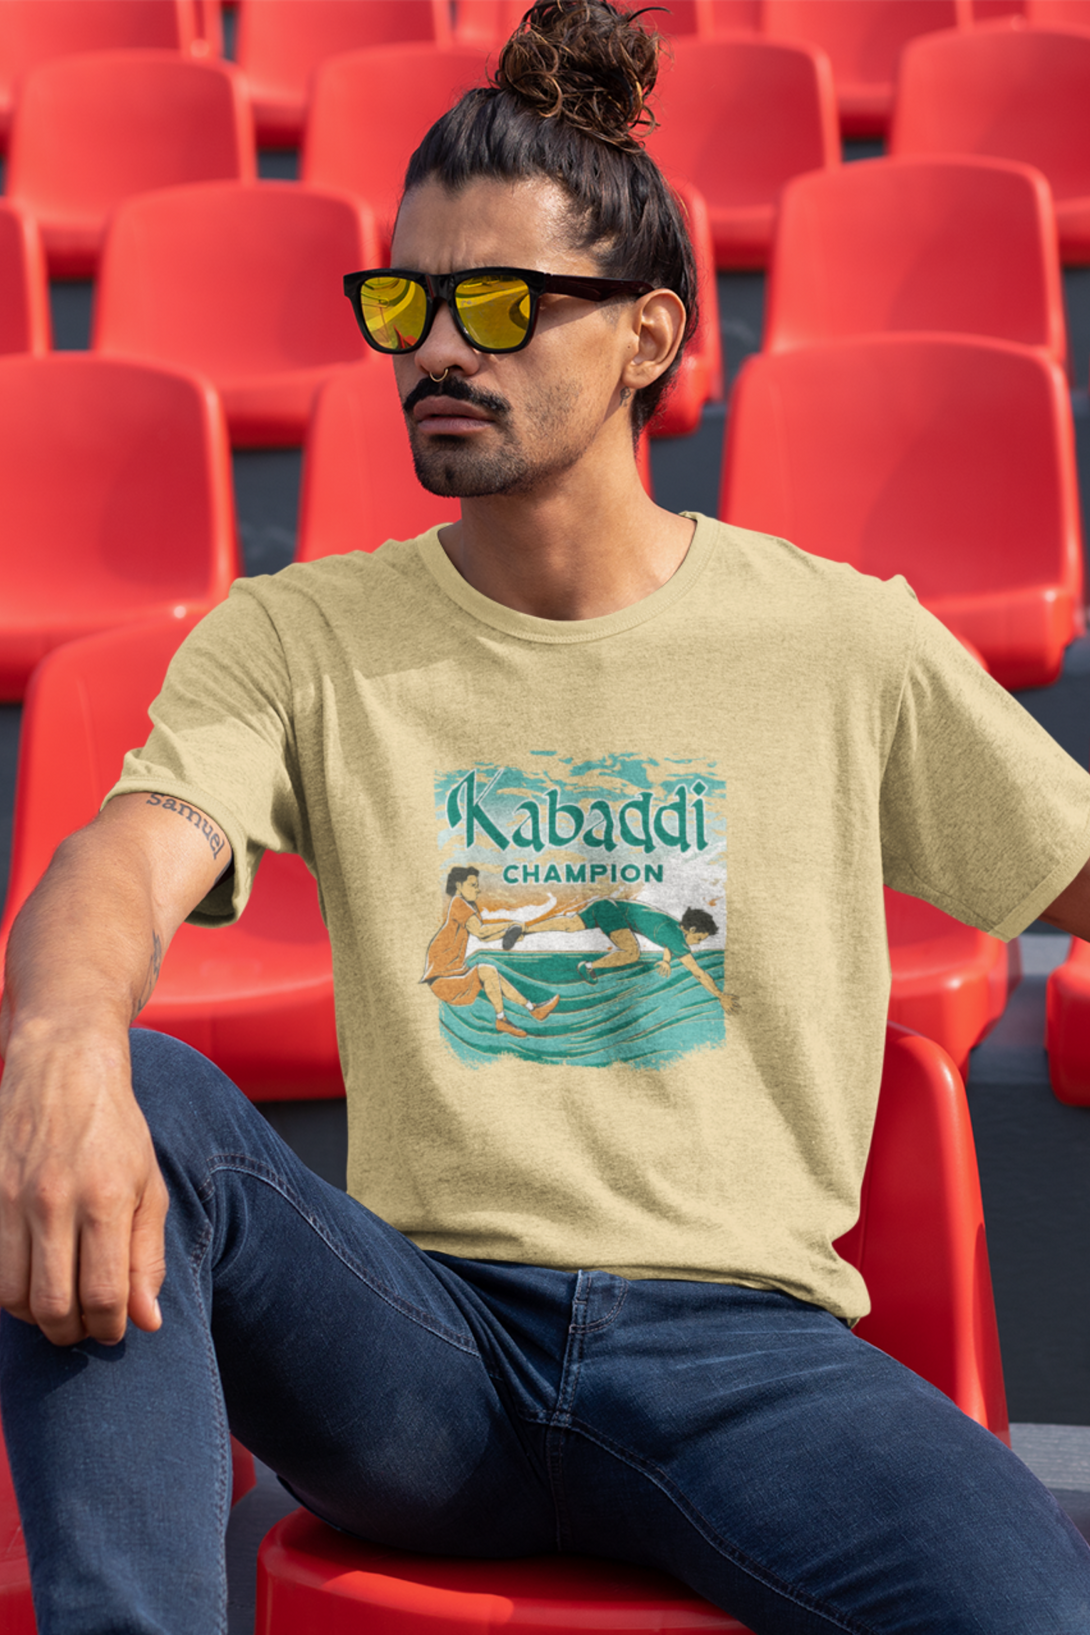 Kabaddi Champion Printed T-Shirt For Men - WowWaves - 4